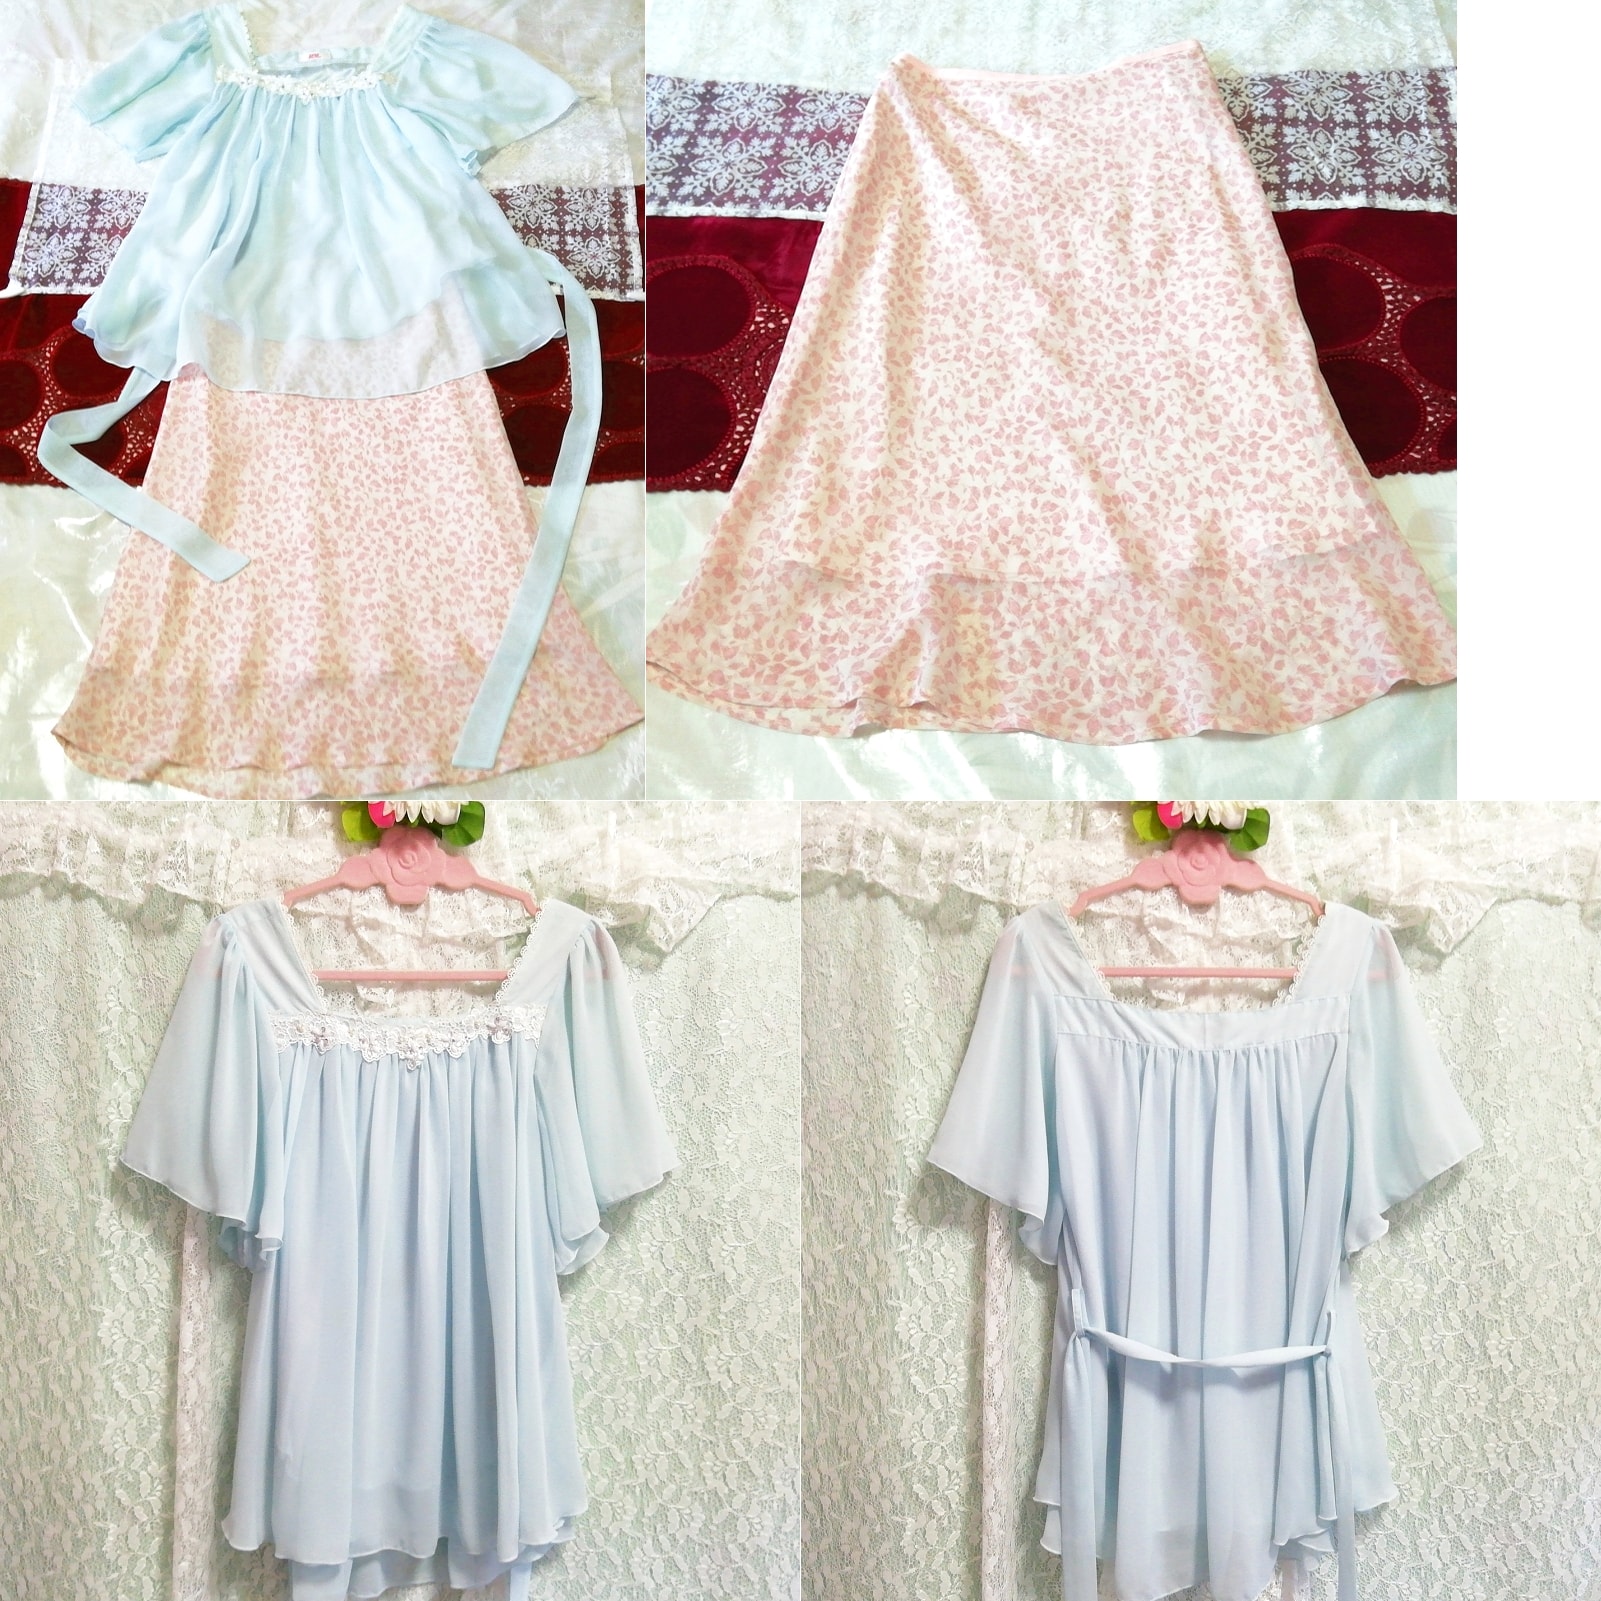 Light blue chiffon tunic negligee nightgown nightwear pink floral pattern skirt 2P, fashion, ladies' fashion, nightwear, pajamas